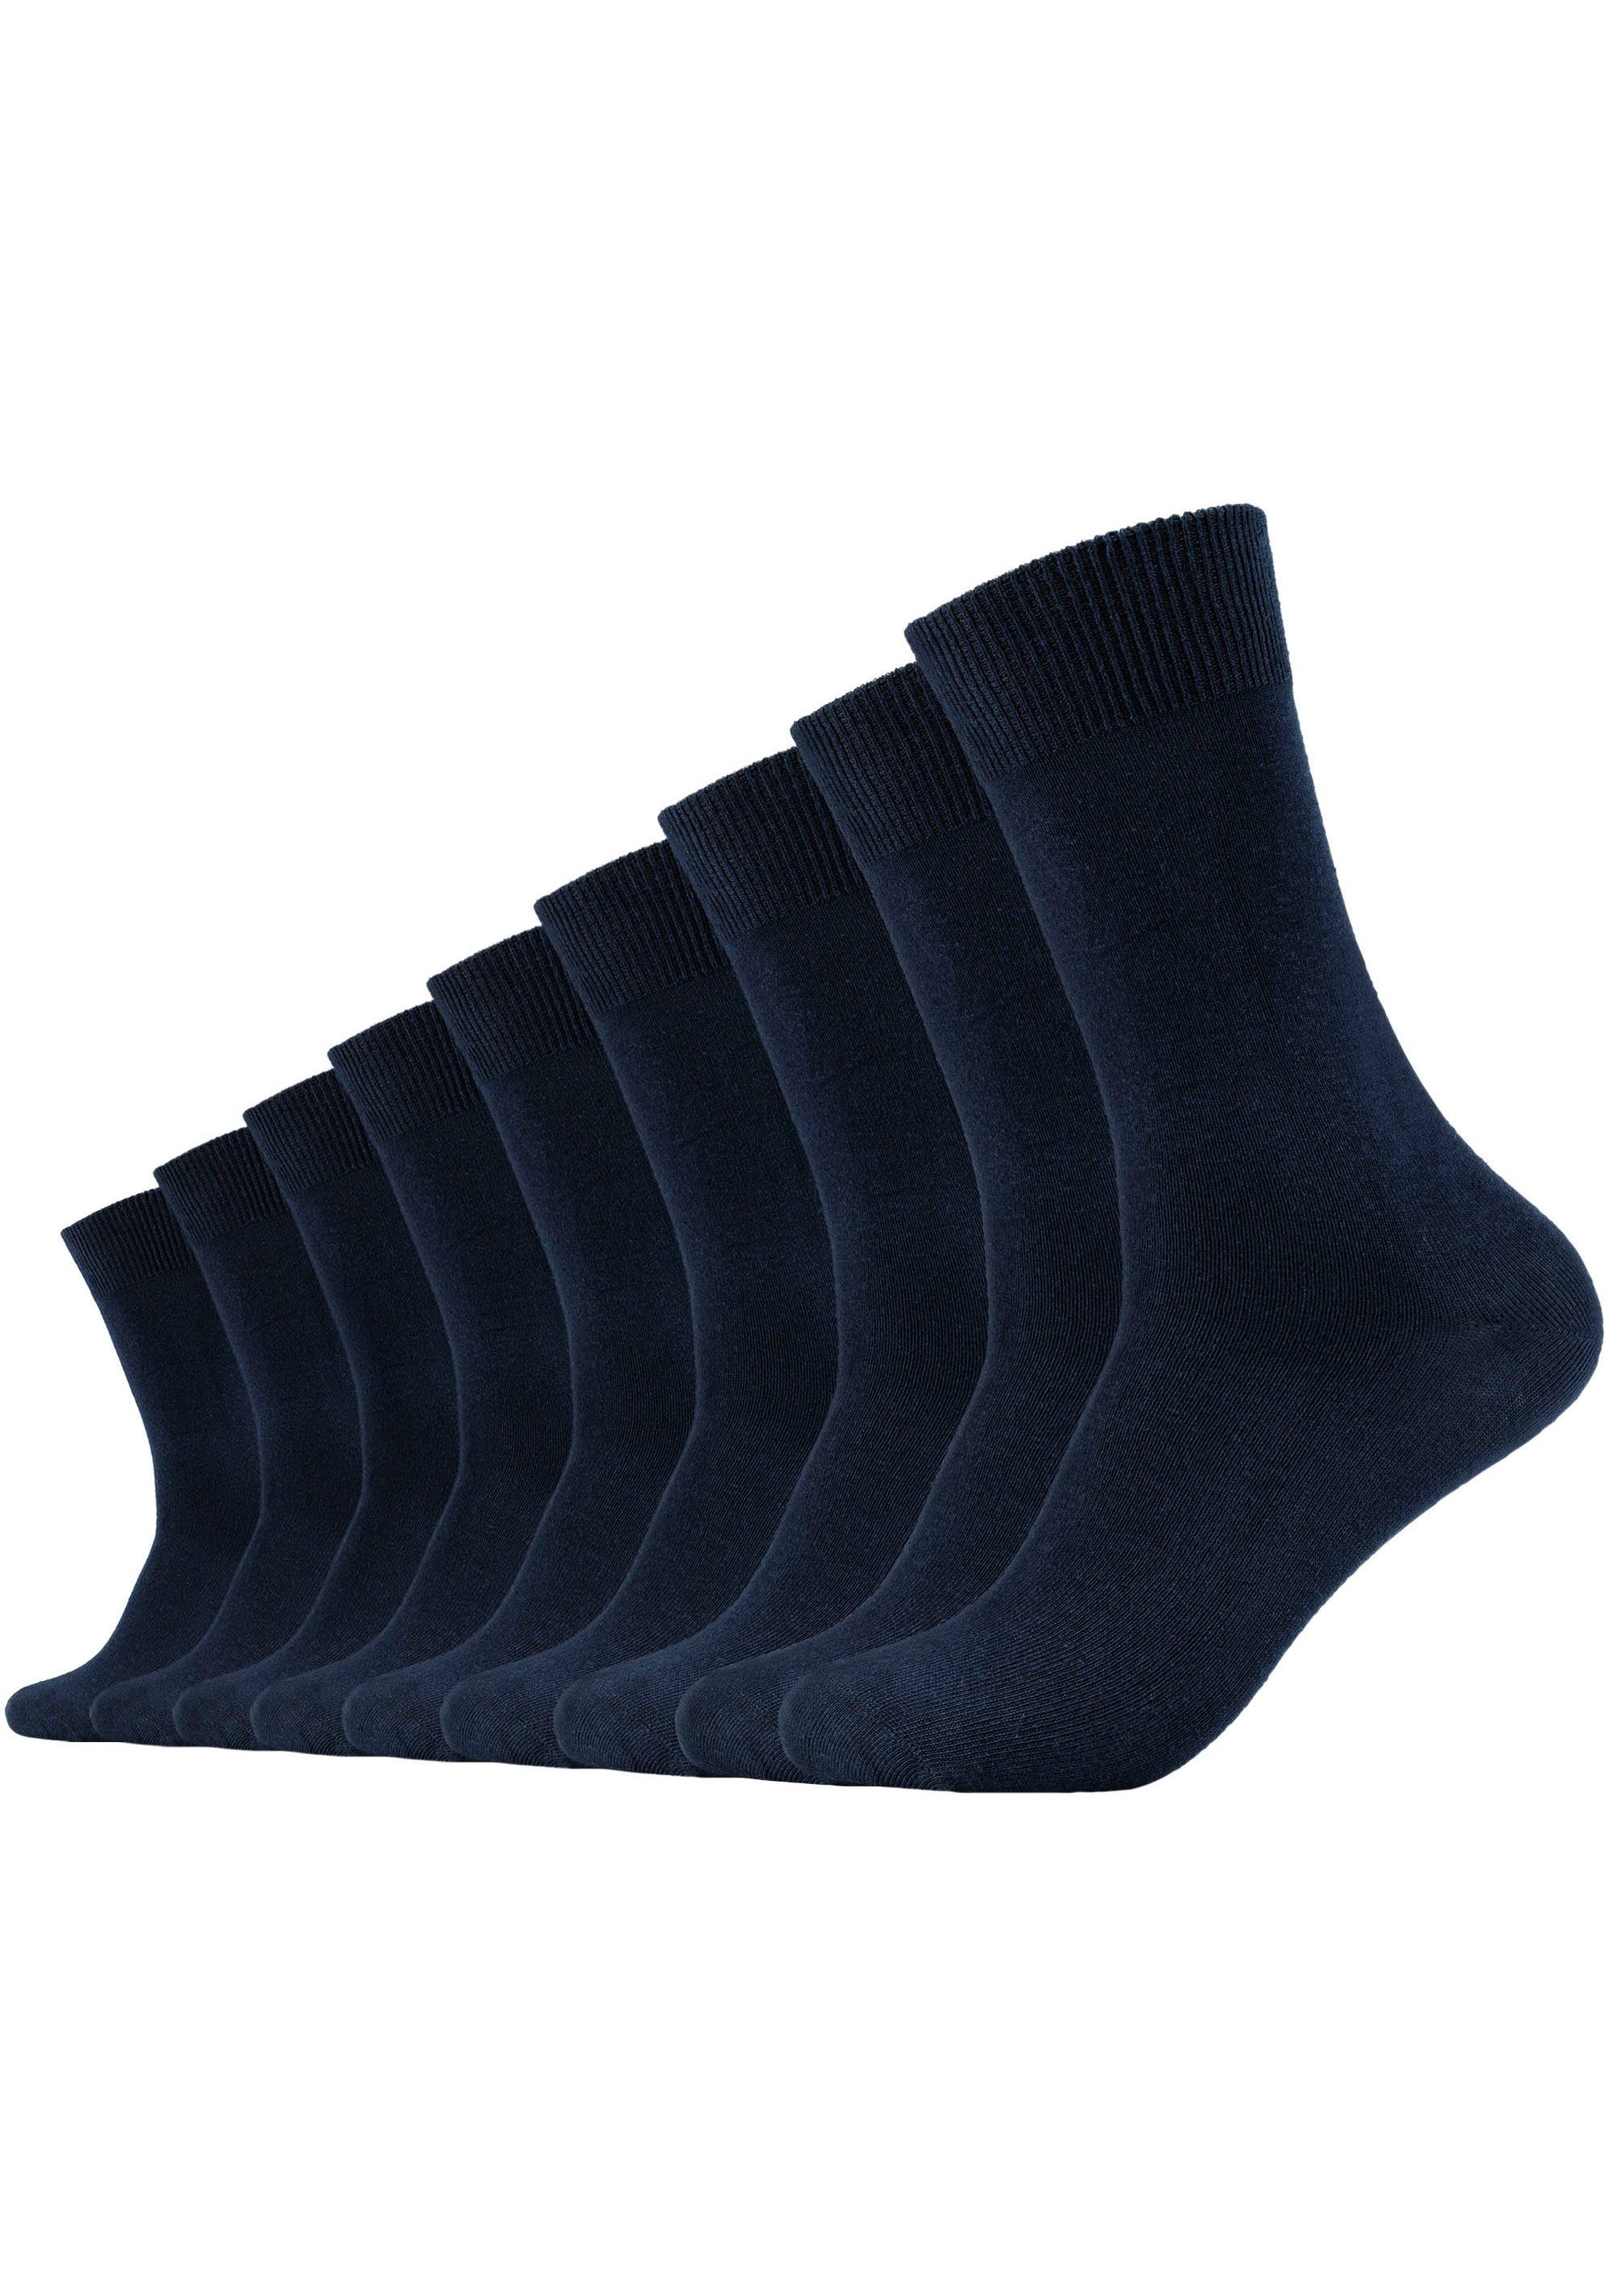 (Packung, Zehenbereich verstärkter und Fersen- Langlebig: 9-Paar) Socken Camano navy